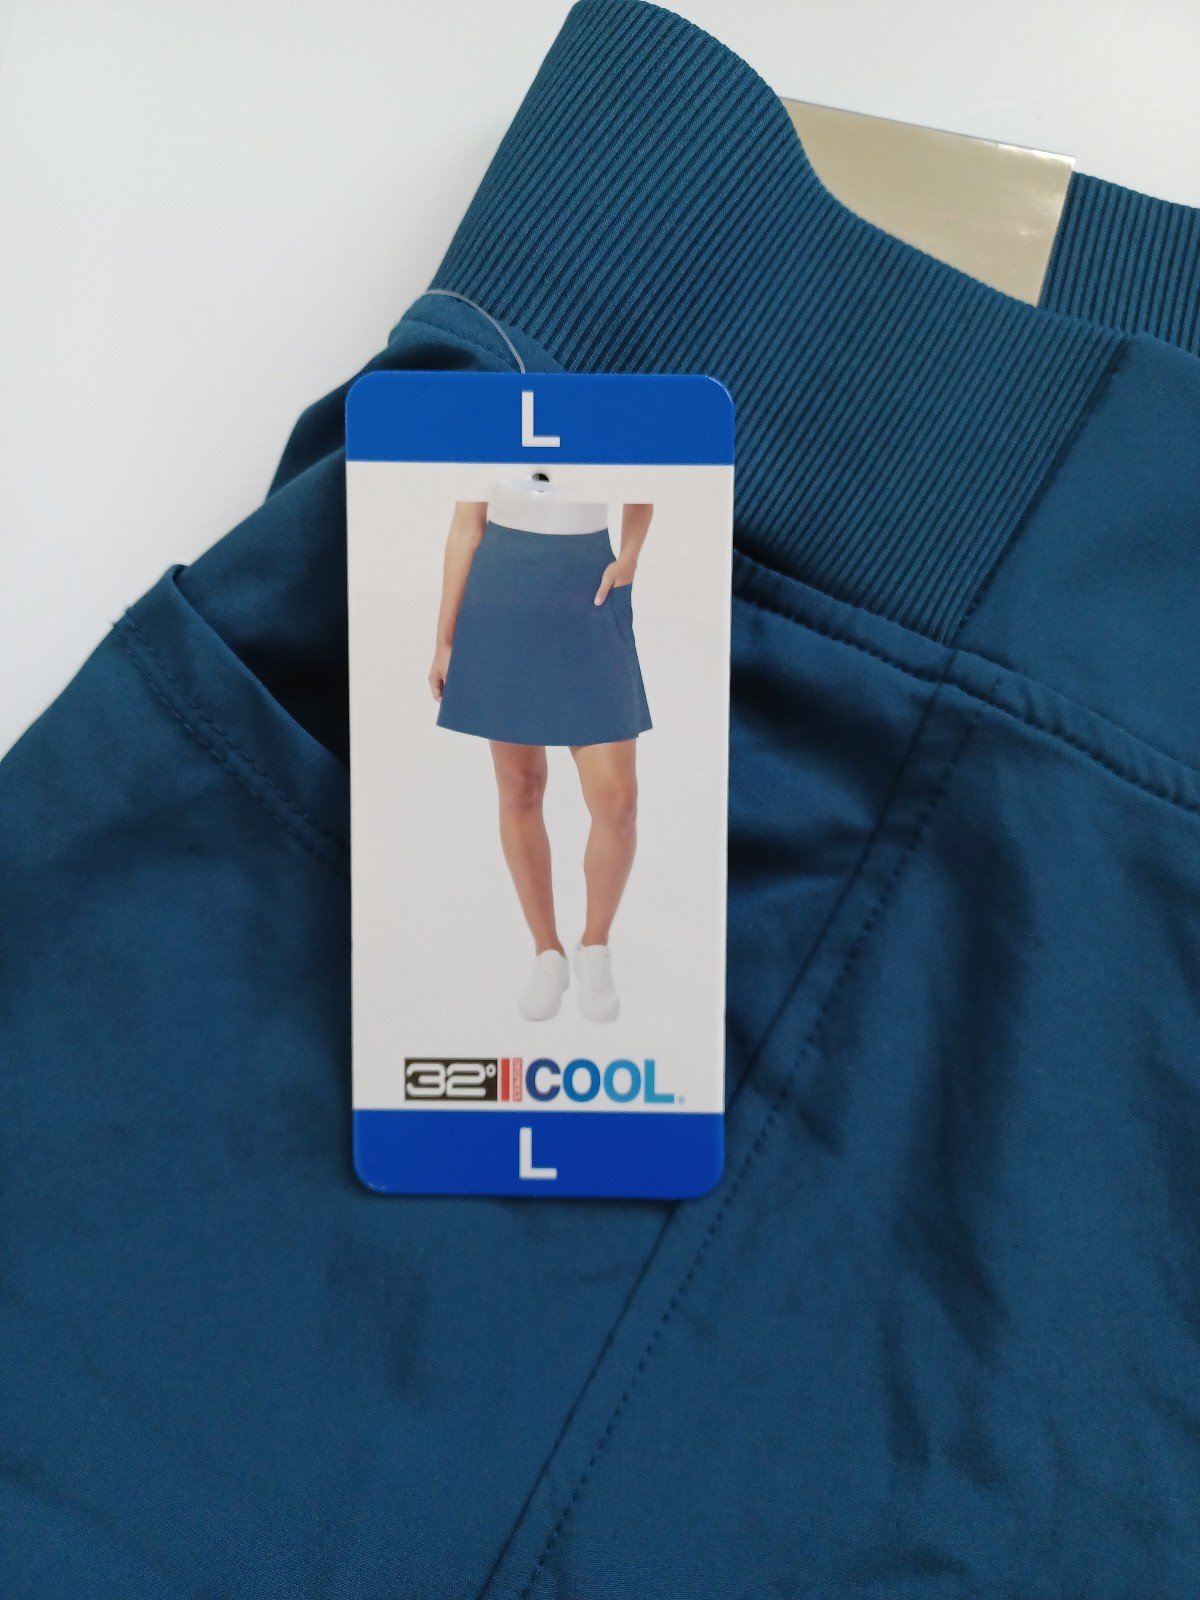 big discount 32 degrees cool skirt size/L color /dark porcelain blue hmOCdTBIN Fashion